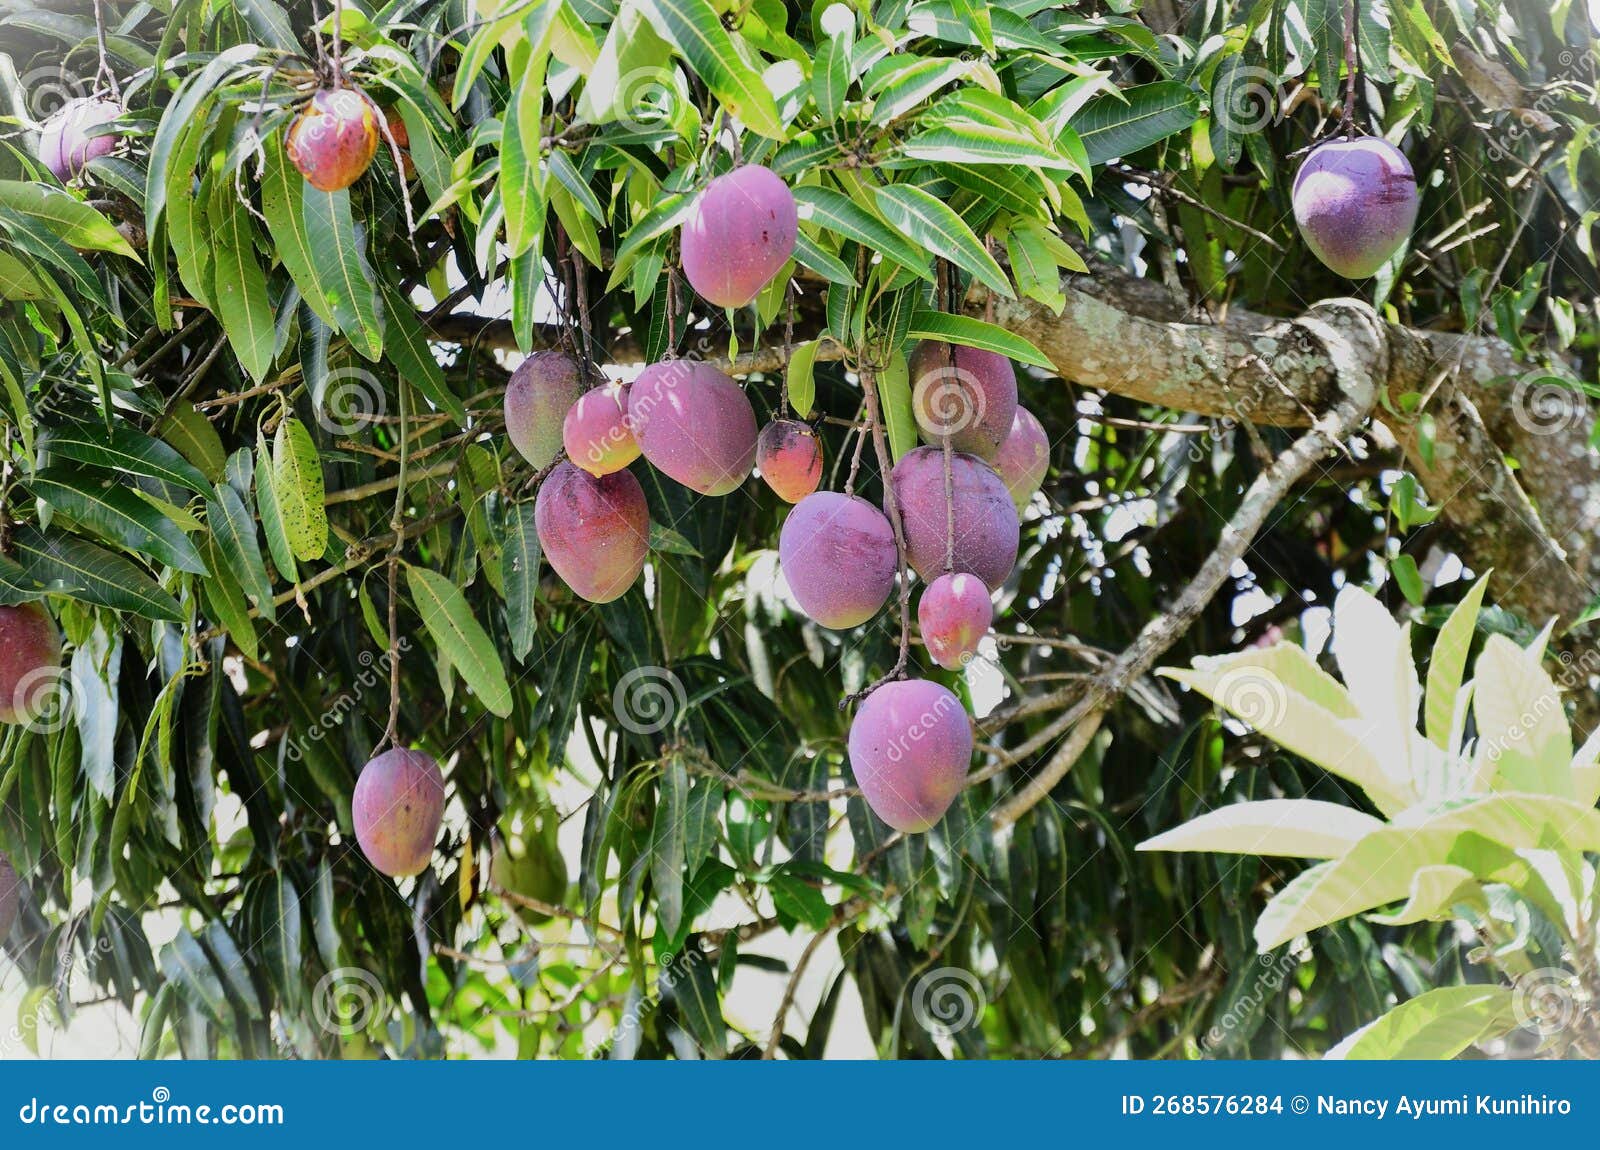 ripe fruits of mangifera indica in the backyard